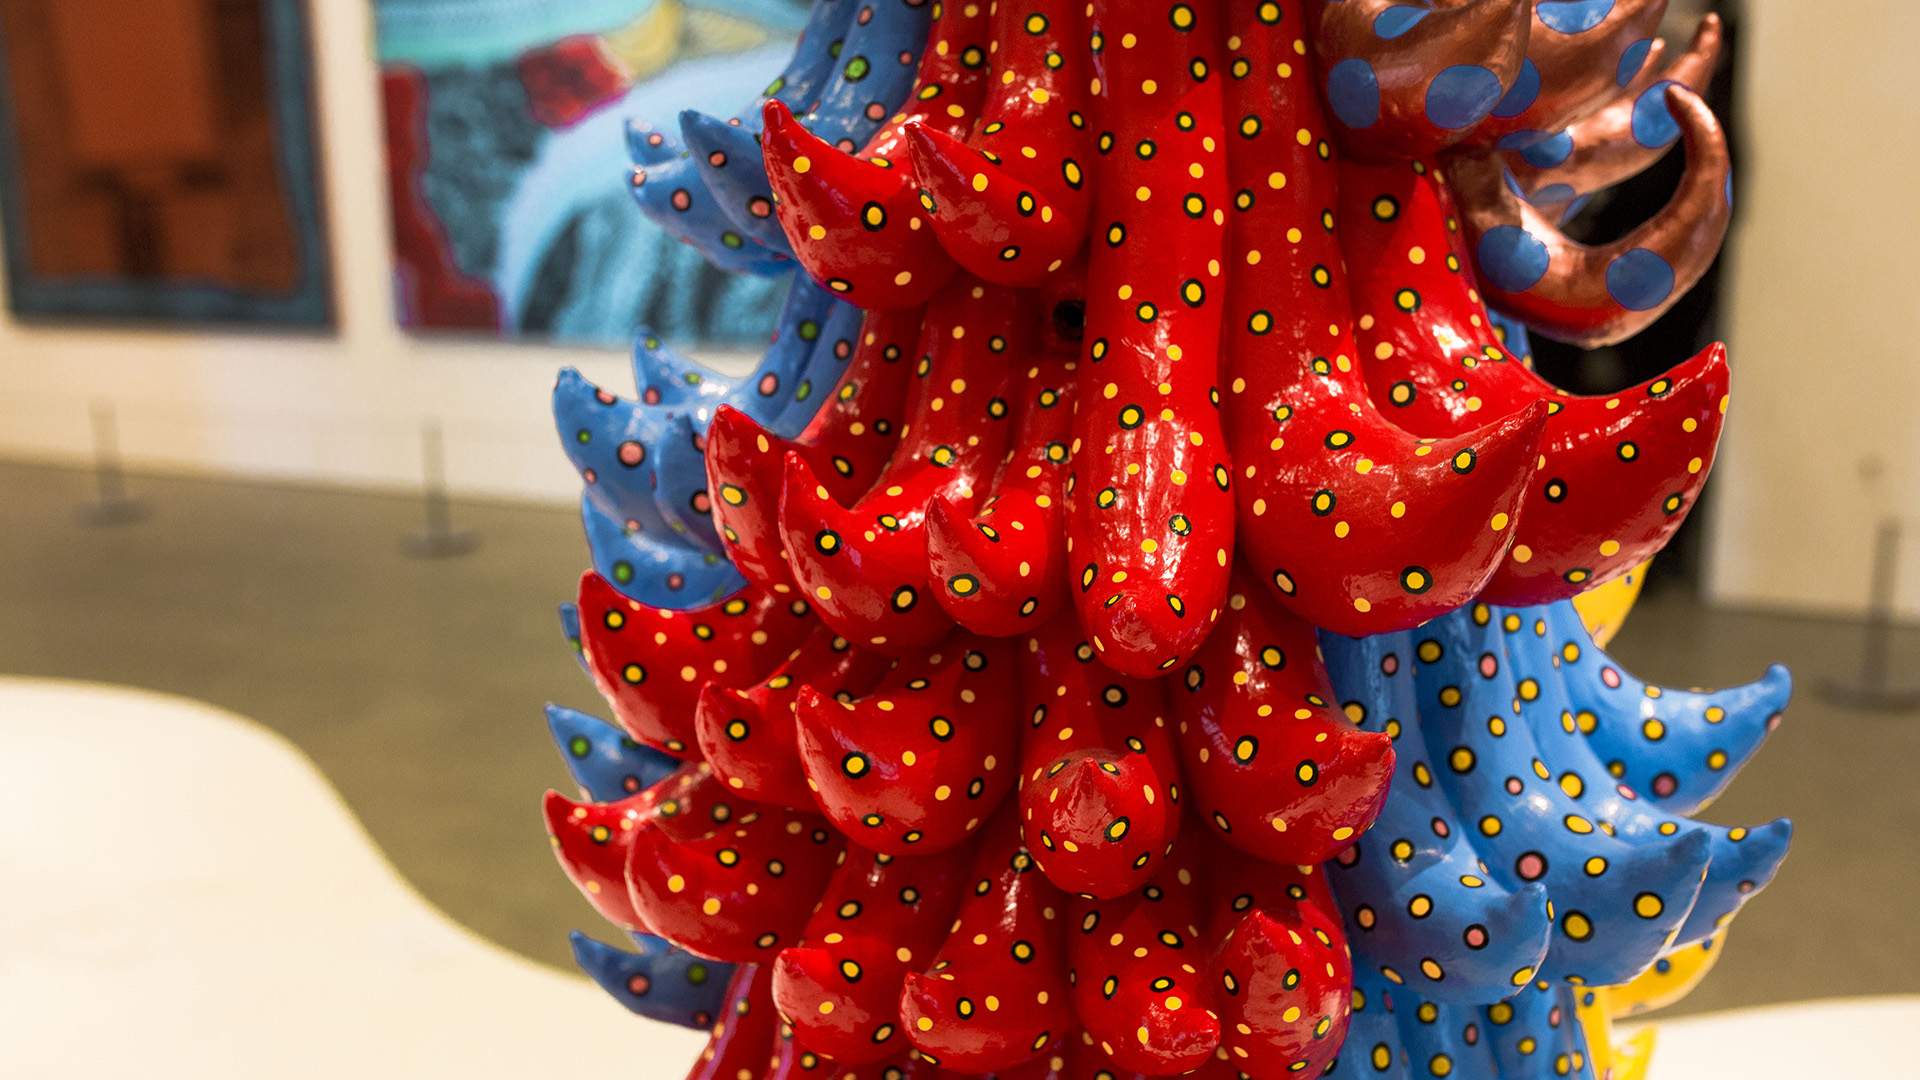 A Look Inside GOMA's Kaleidoscopic 'Yayoi Kusama: Life Is the Heart of a Rainbow' Exhibition